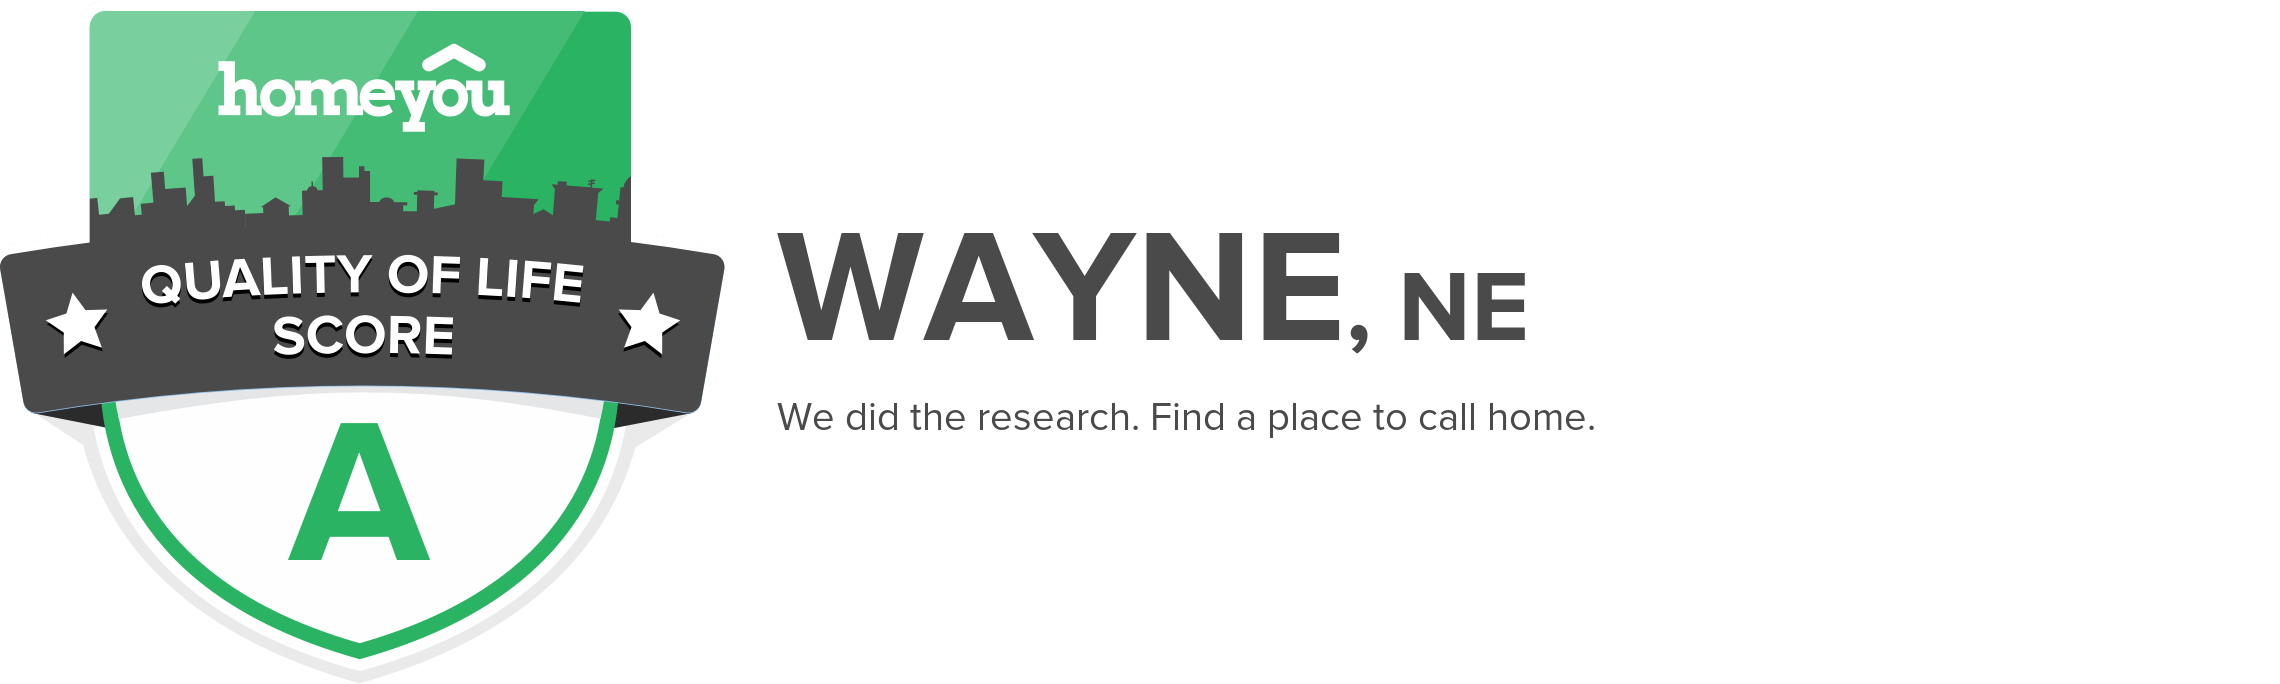 Wayne, NE